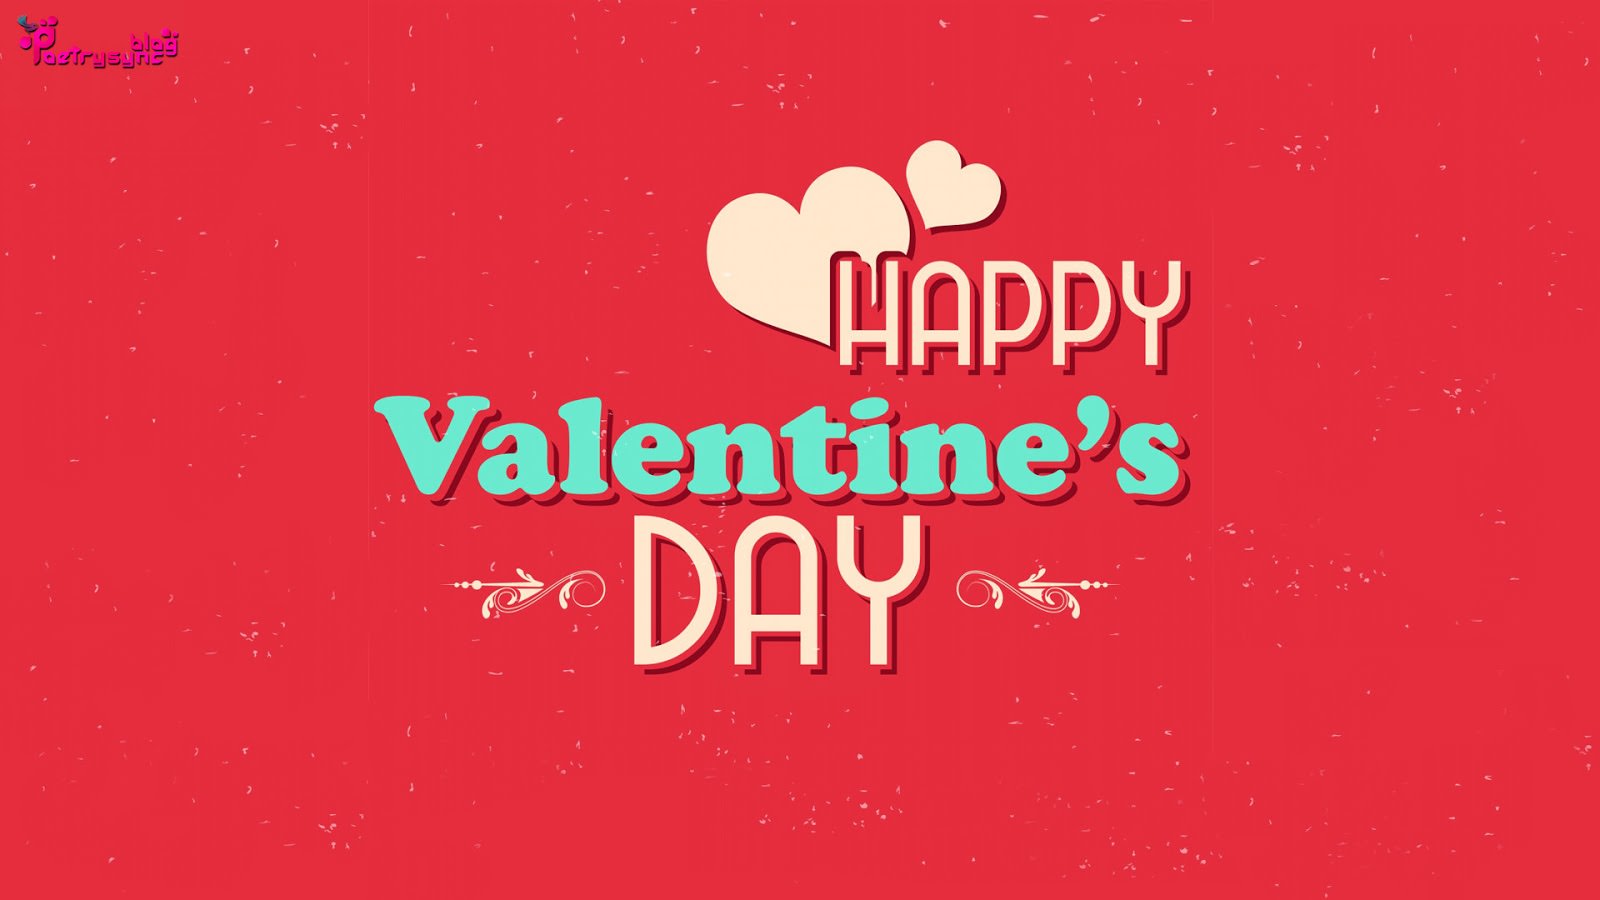 Happy Valentine's Day Hearts Wallpaper Image